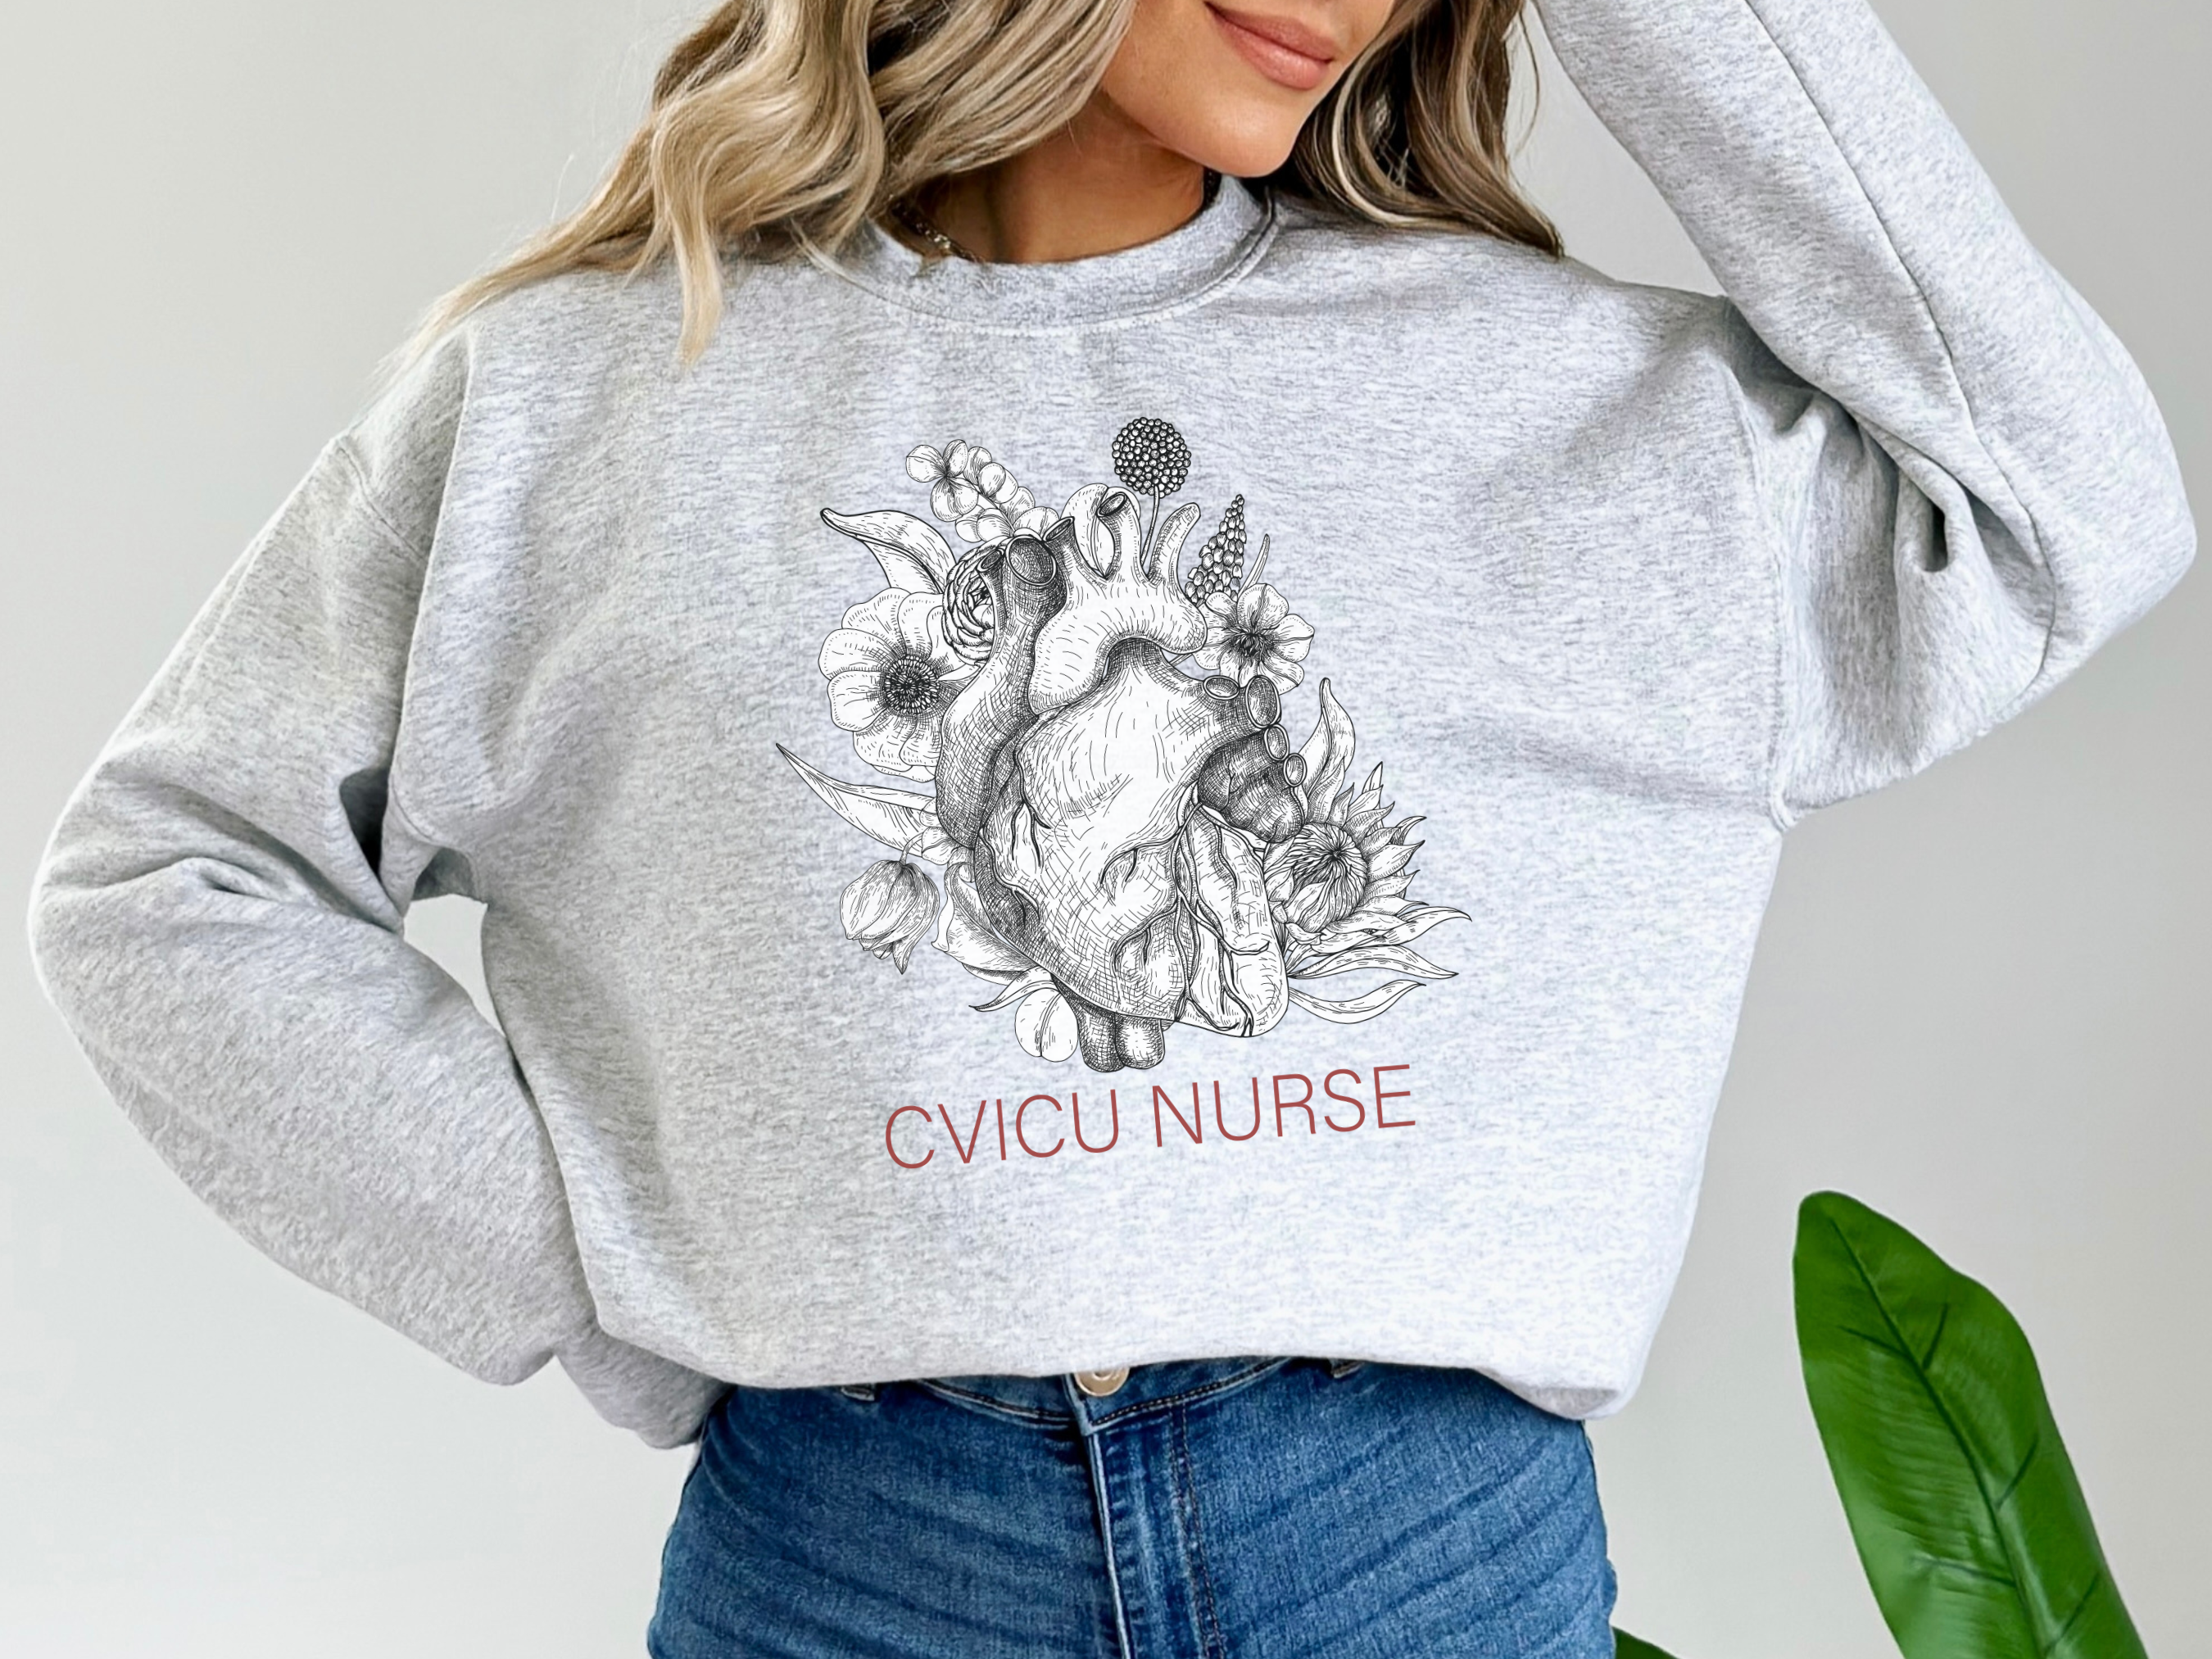 CVICU Nurse Sweatshirt - Study In Nursing